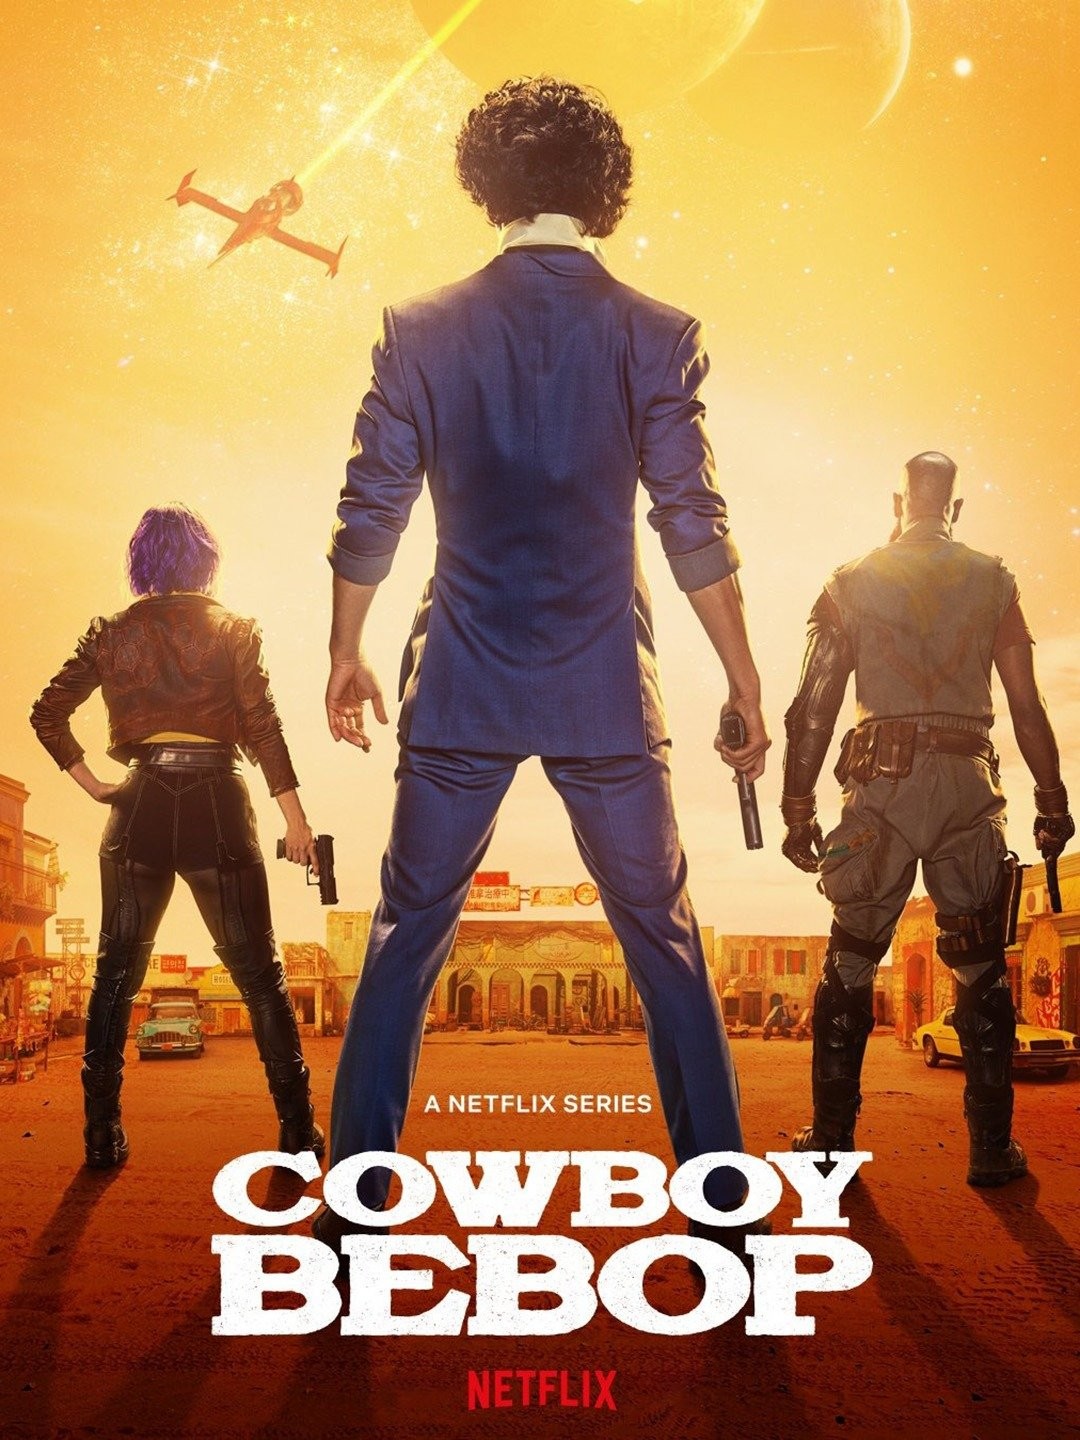 Netflix's One Piece Has 1 Big Advantage Over Cowboy Bebop - IMDb